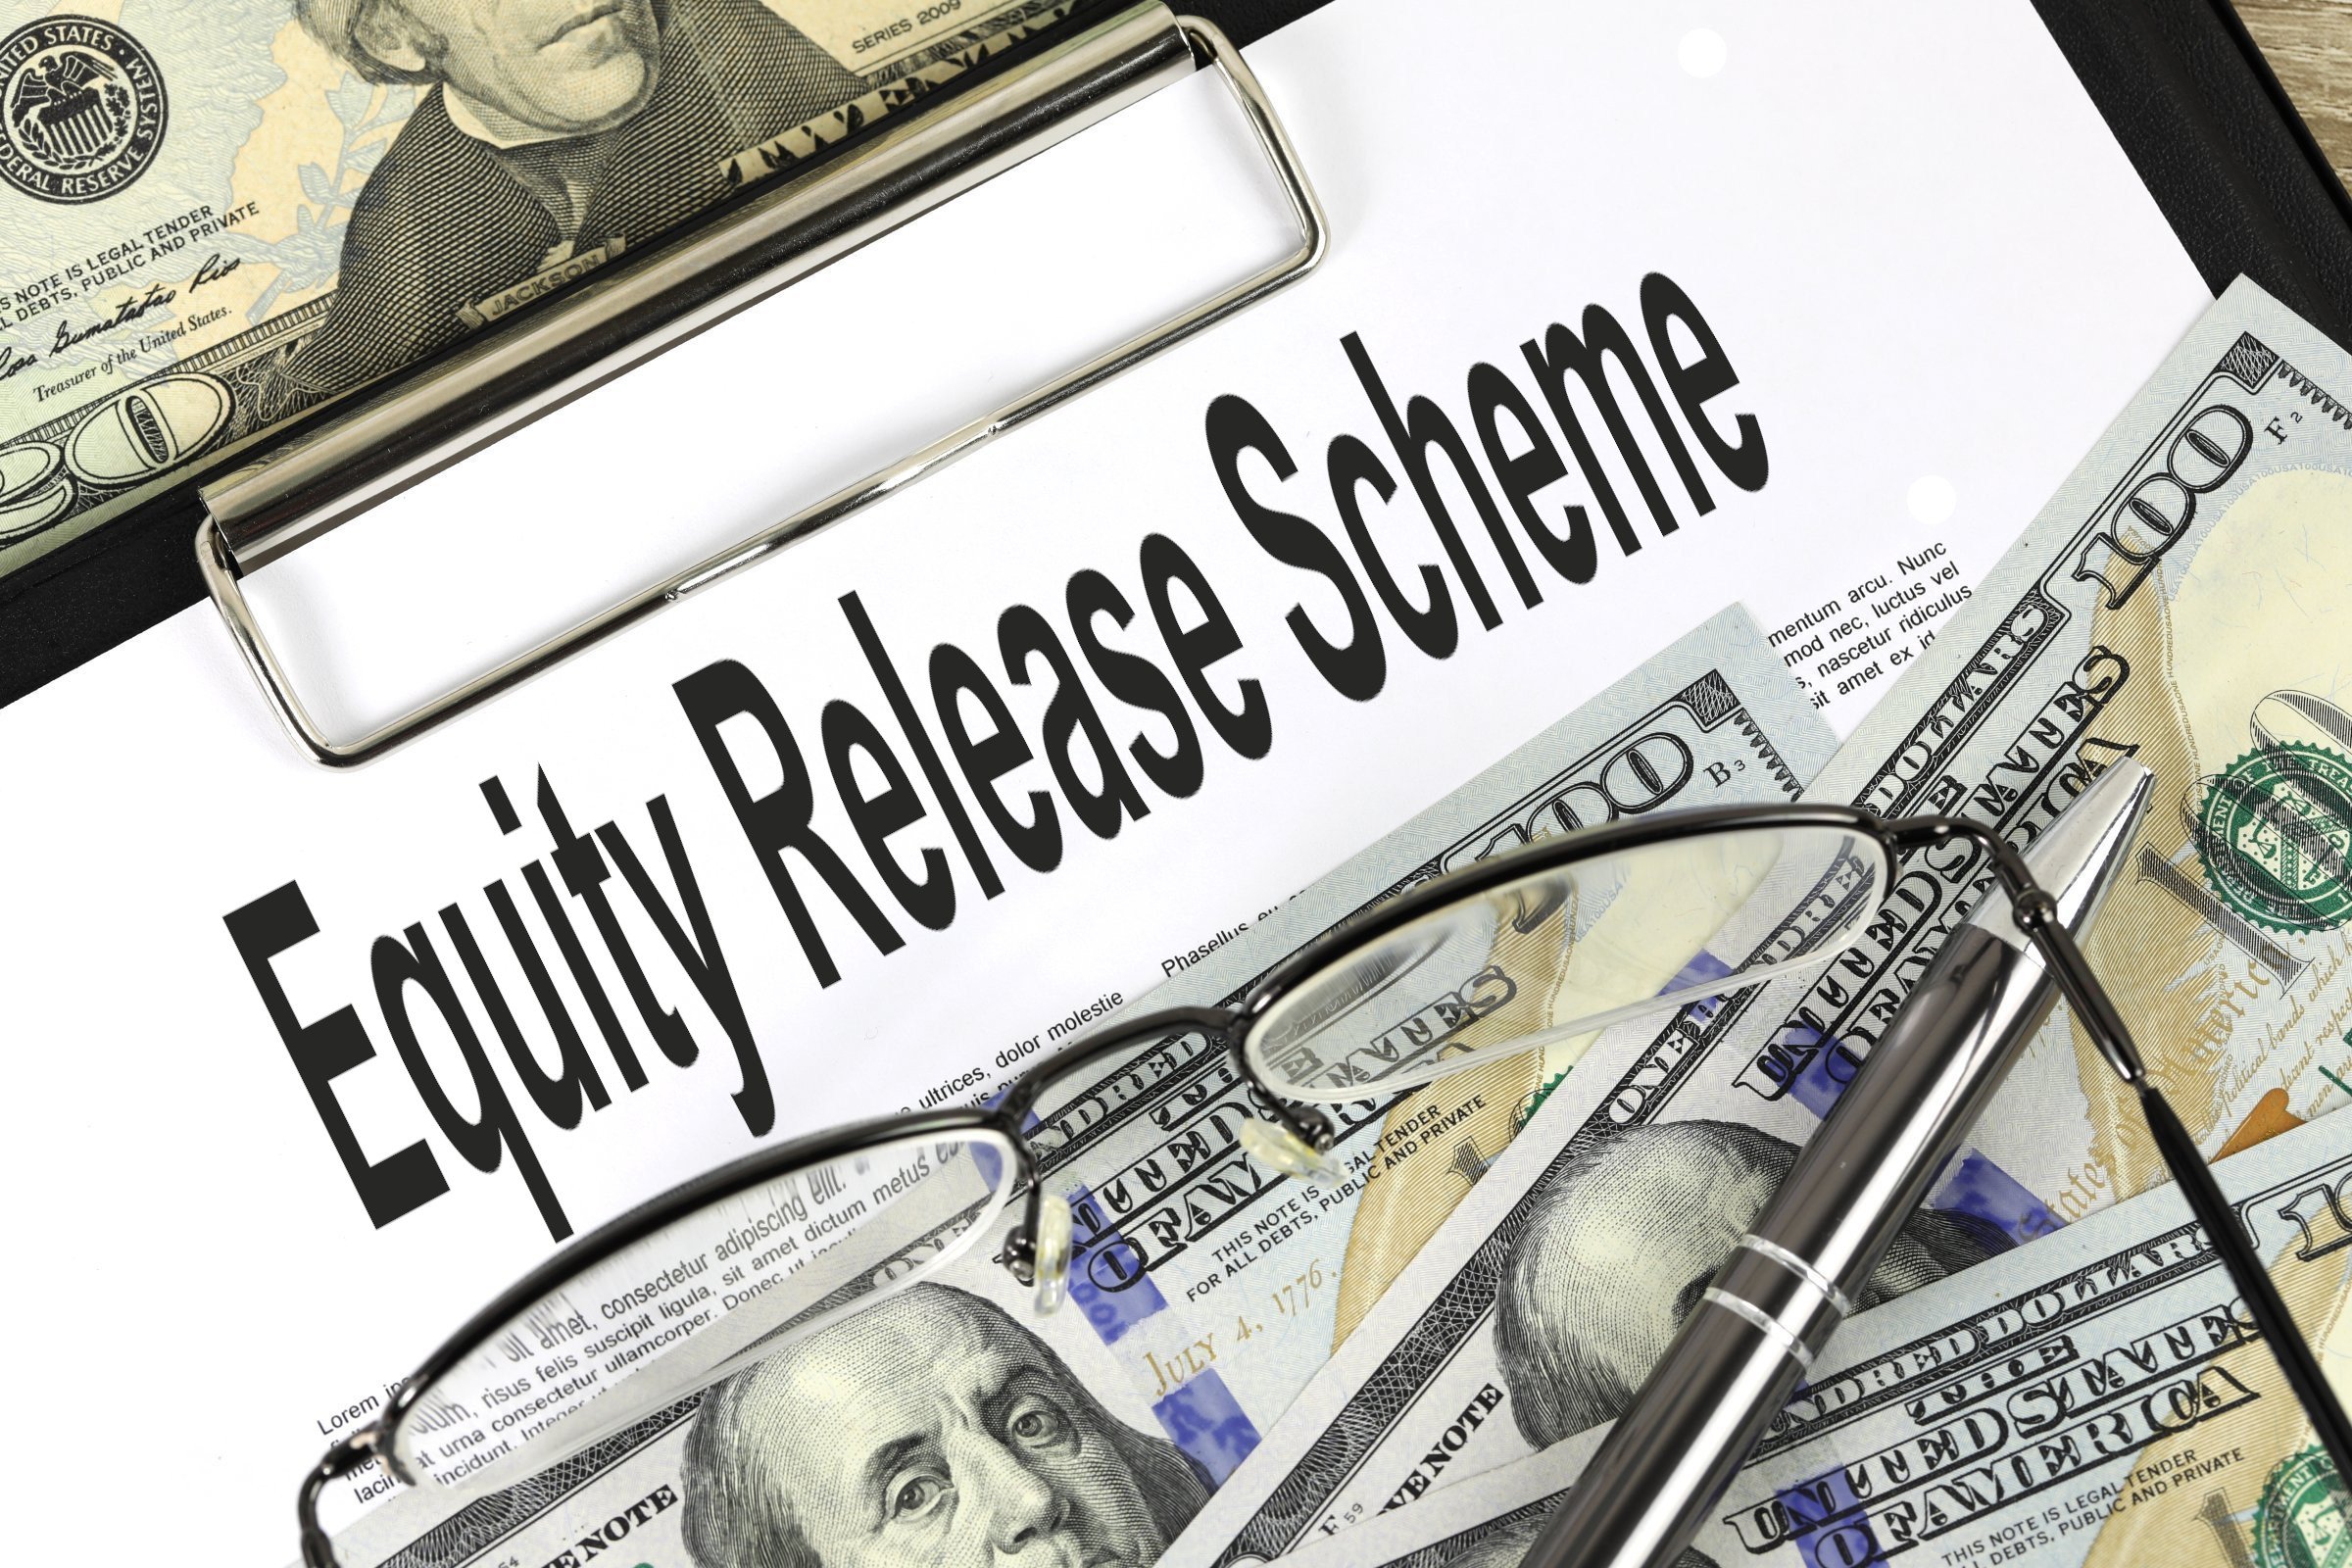 equity release scheme